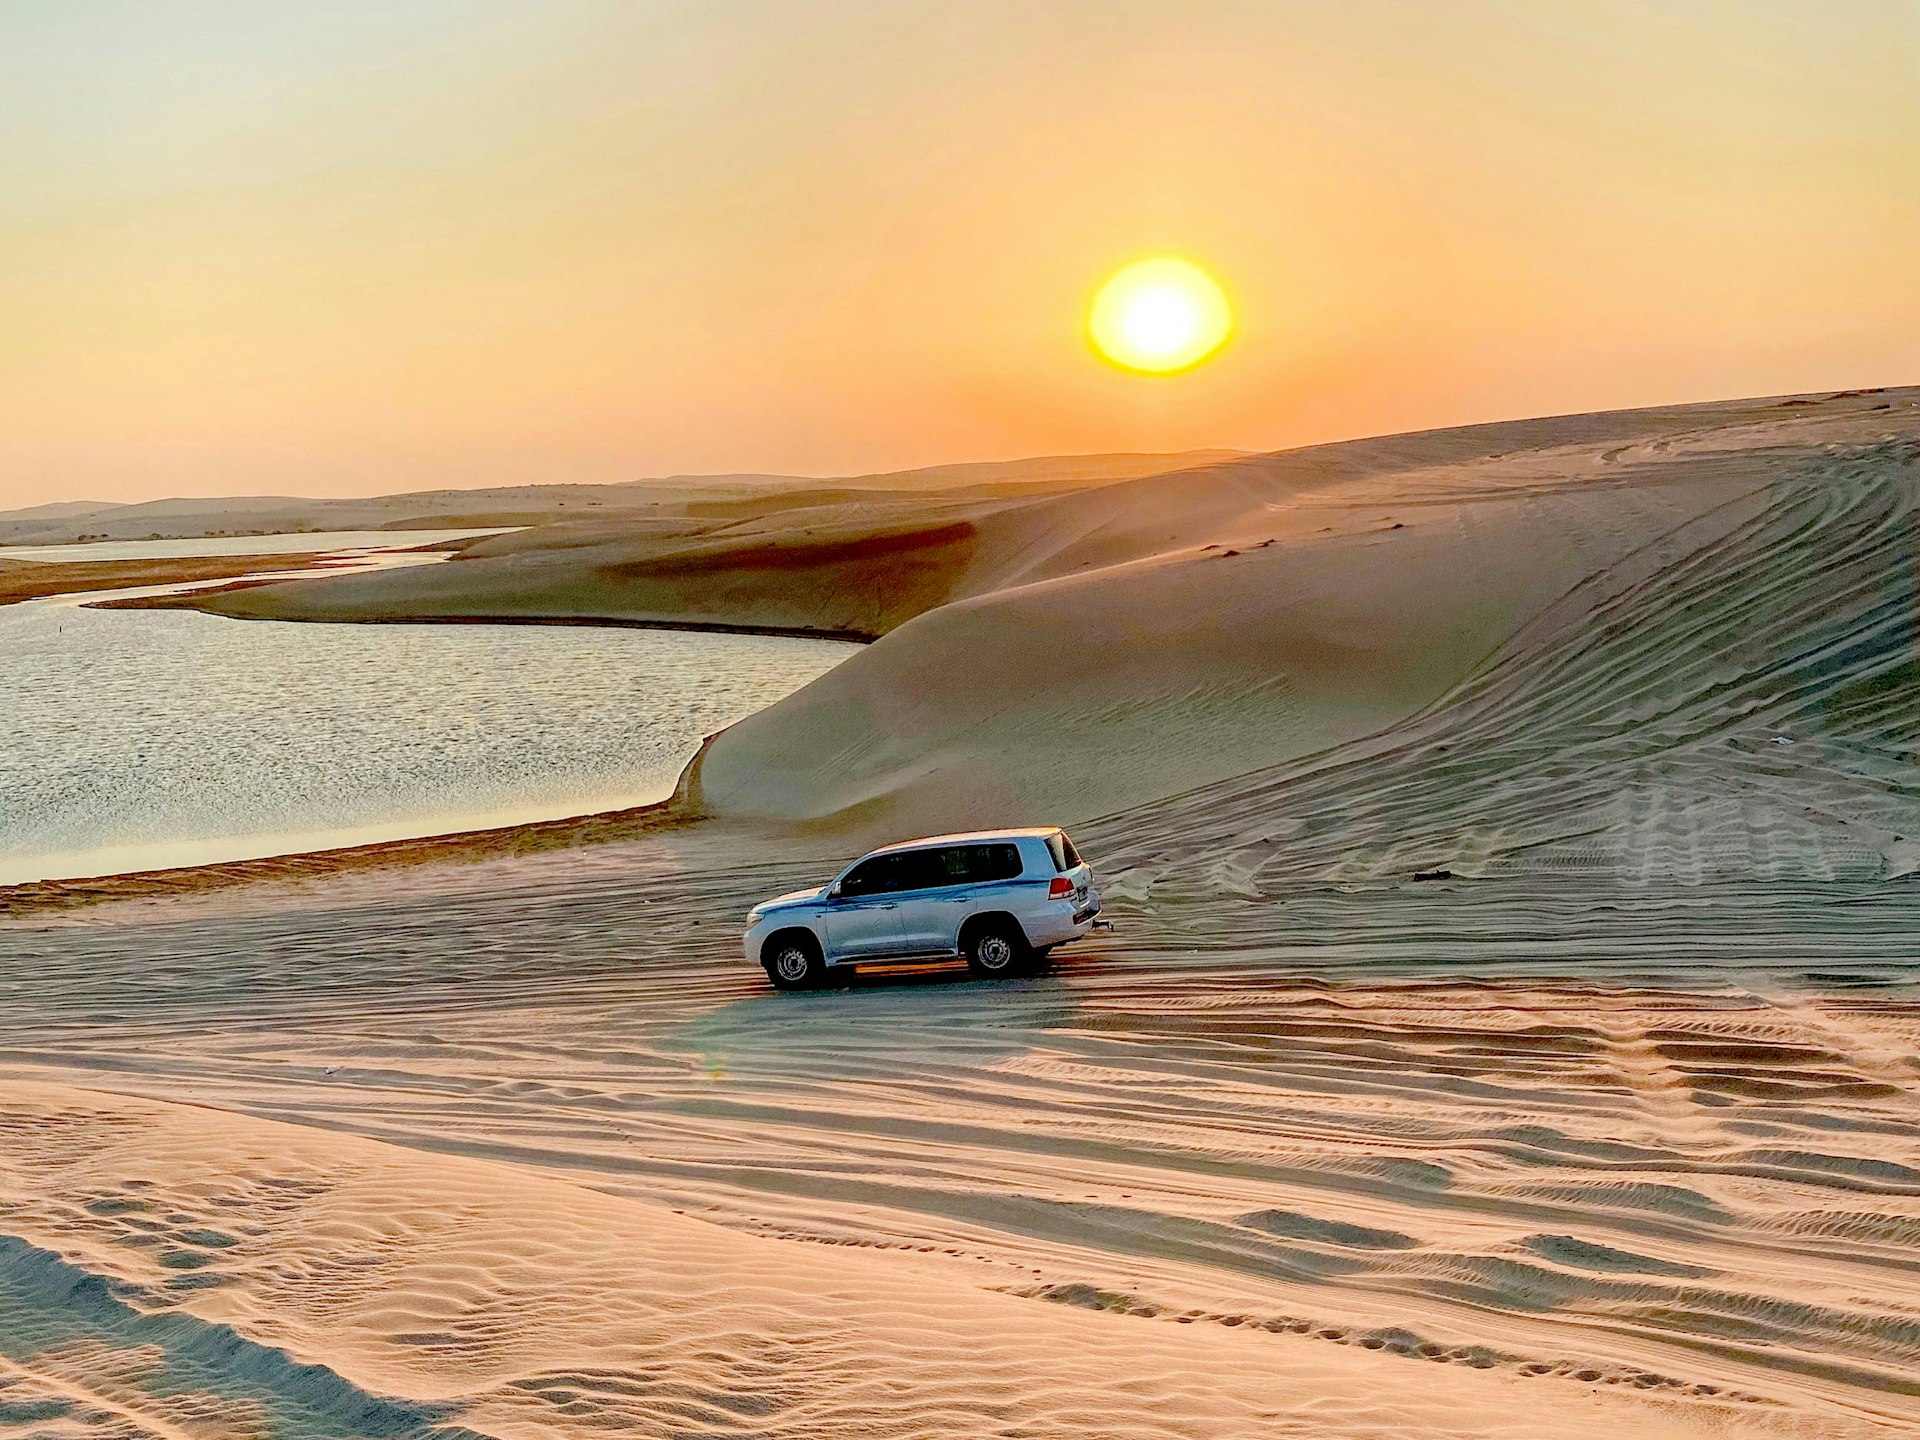 Qatar_Adventure_5_Qatar_Adventure_5_Dunes.jpg